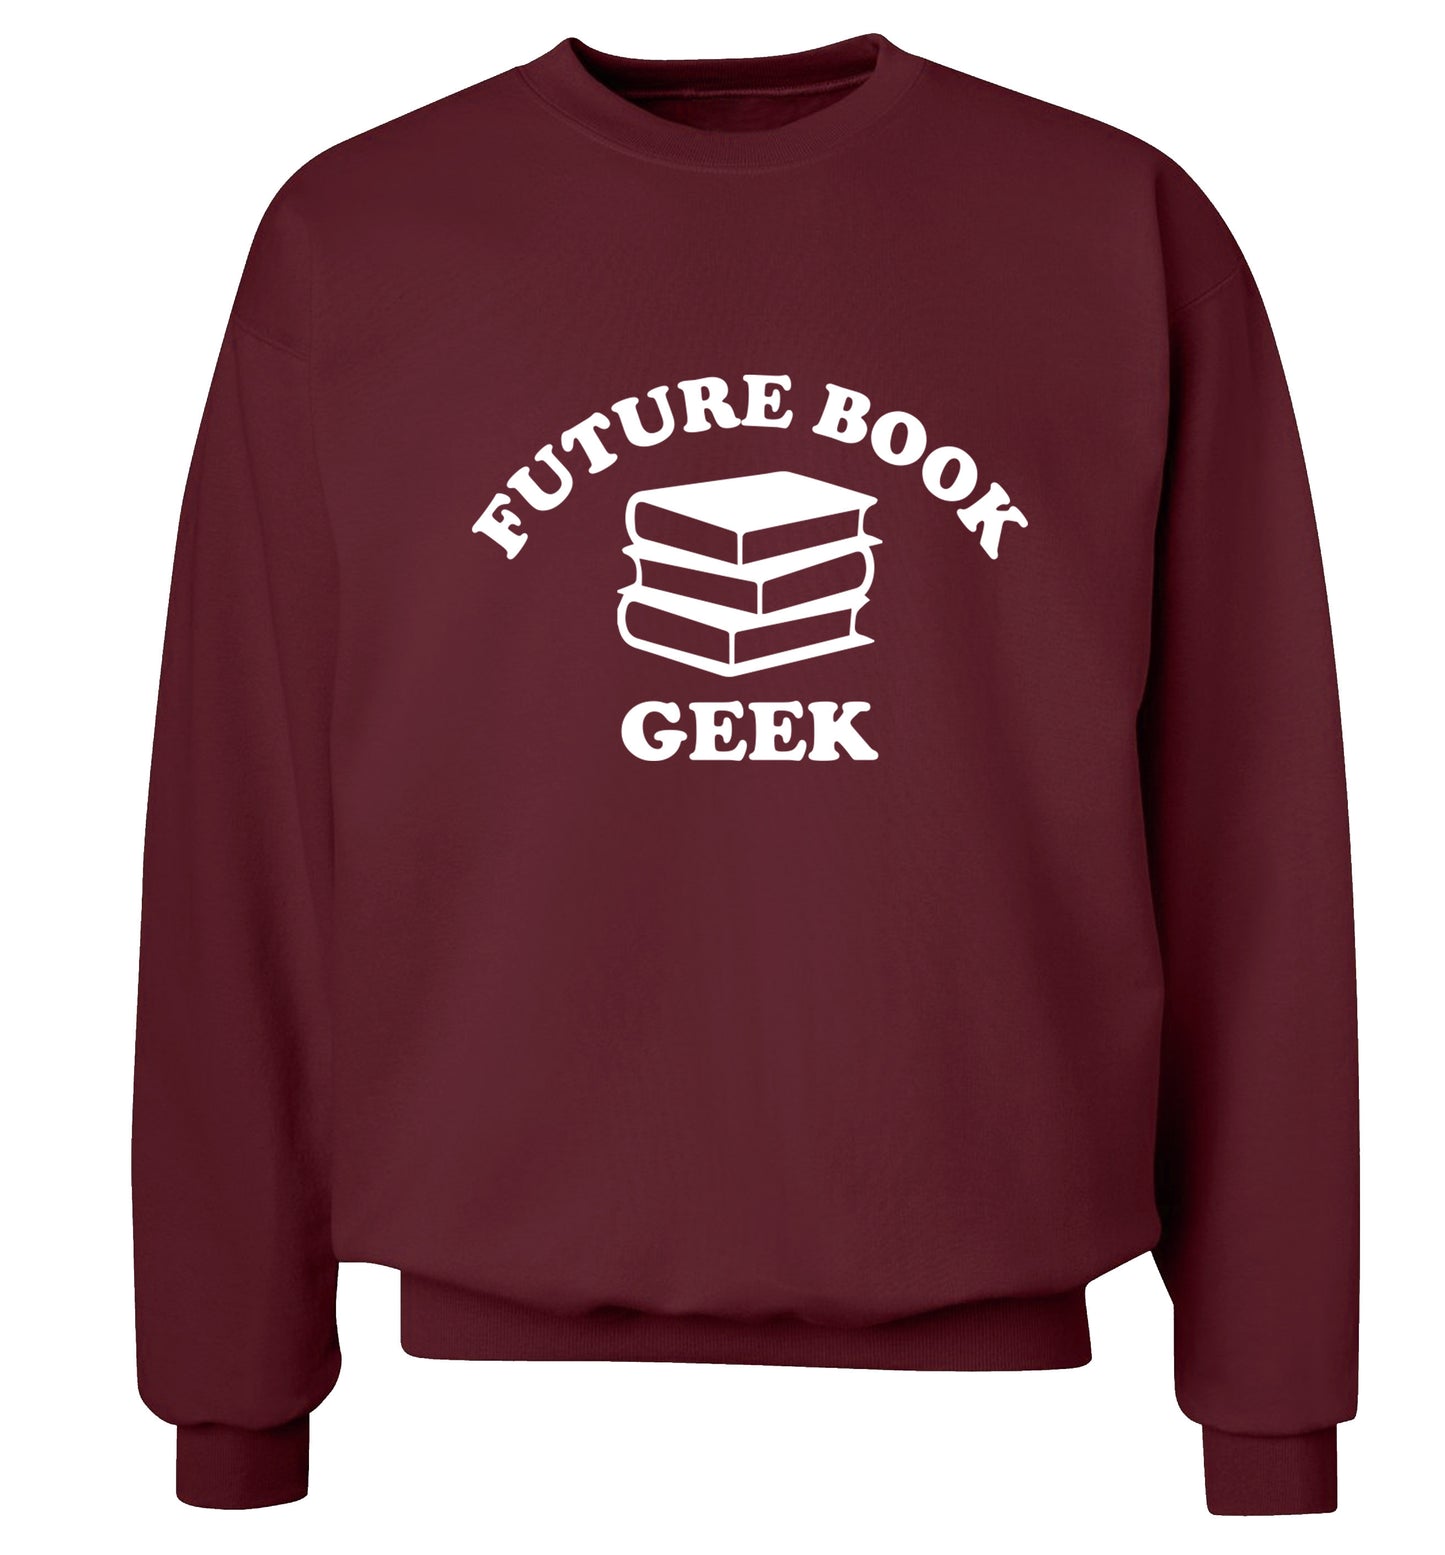 Future book geek Adult's unisex maroon Sweater 2XL